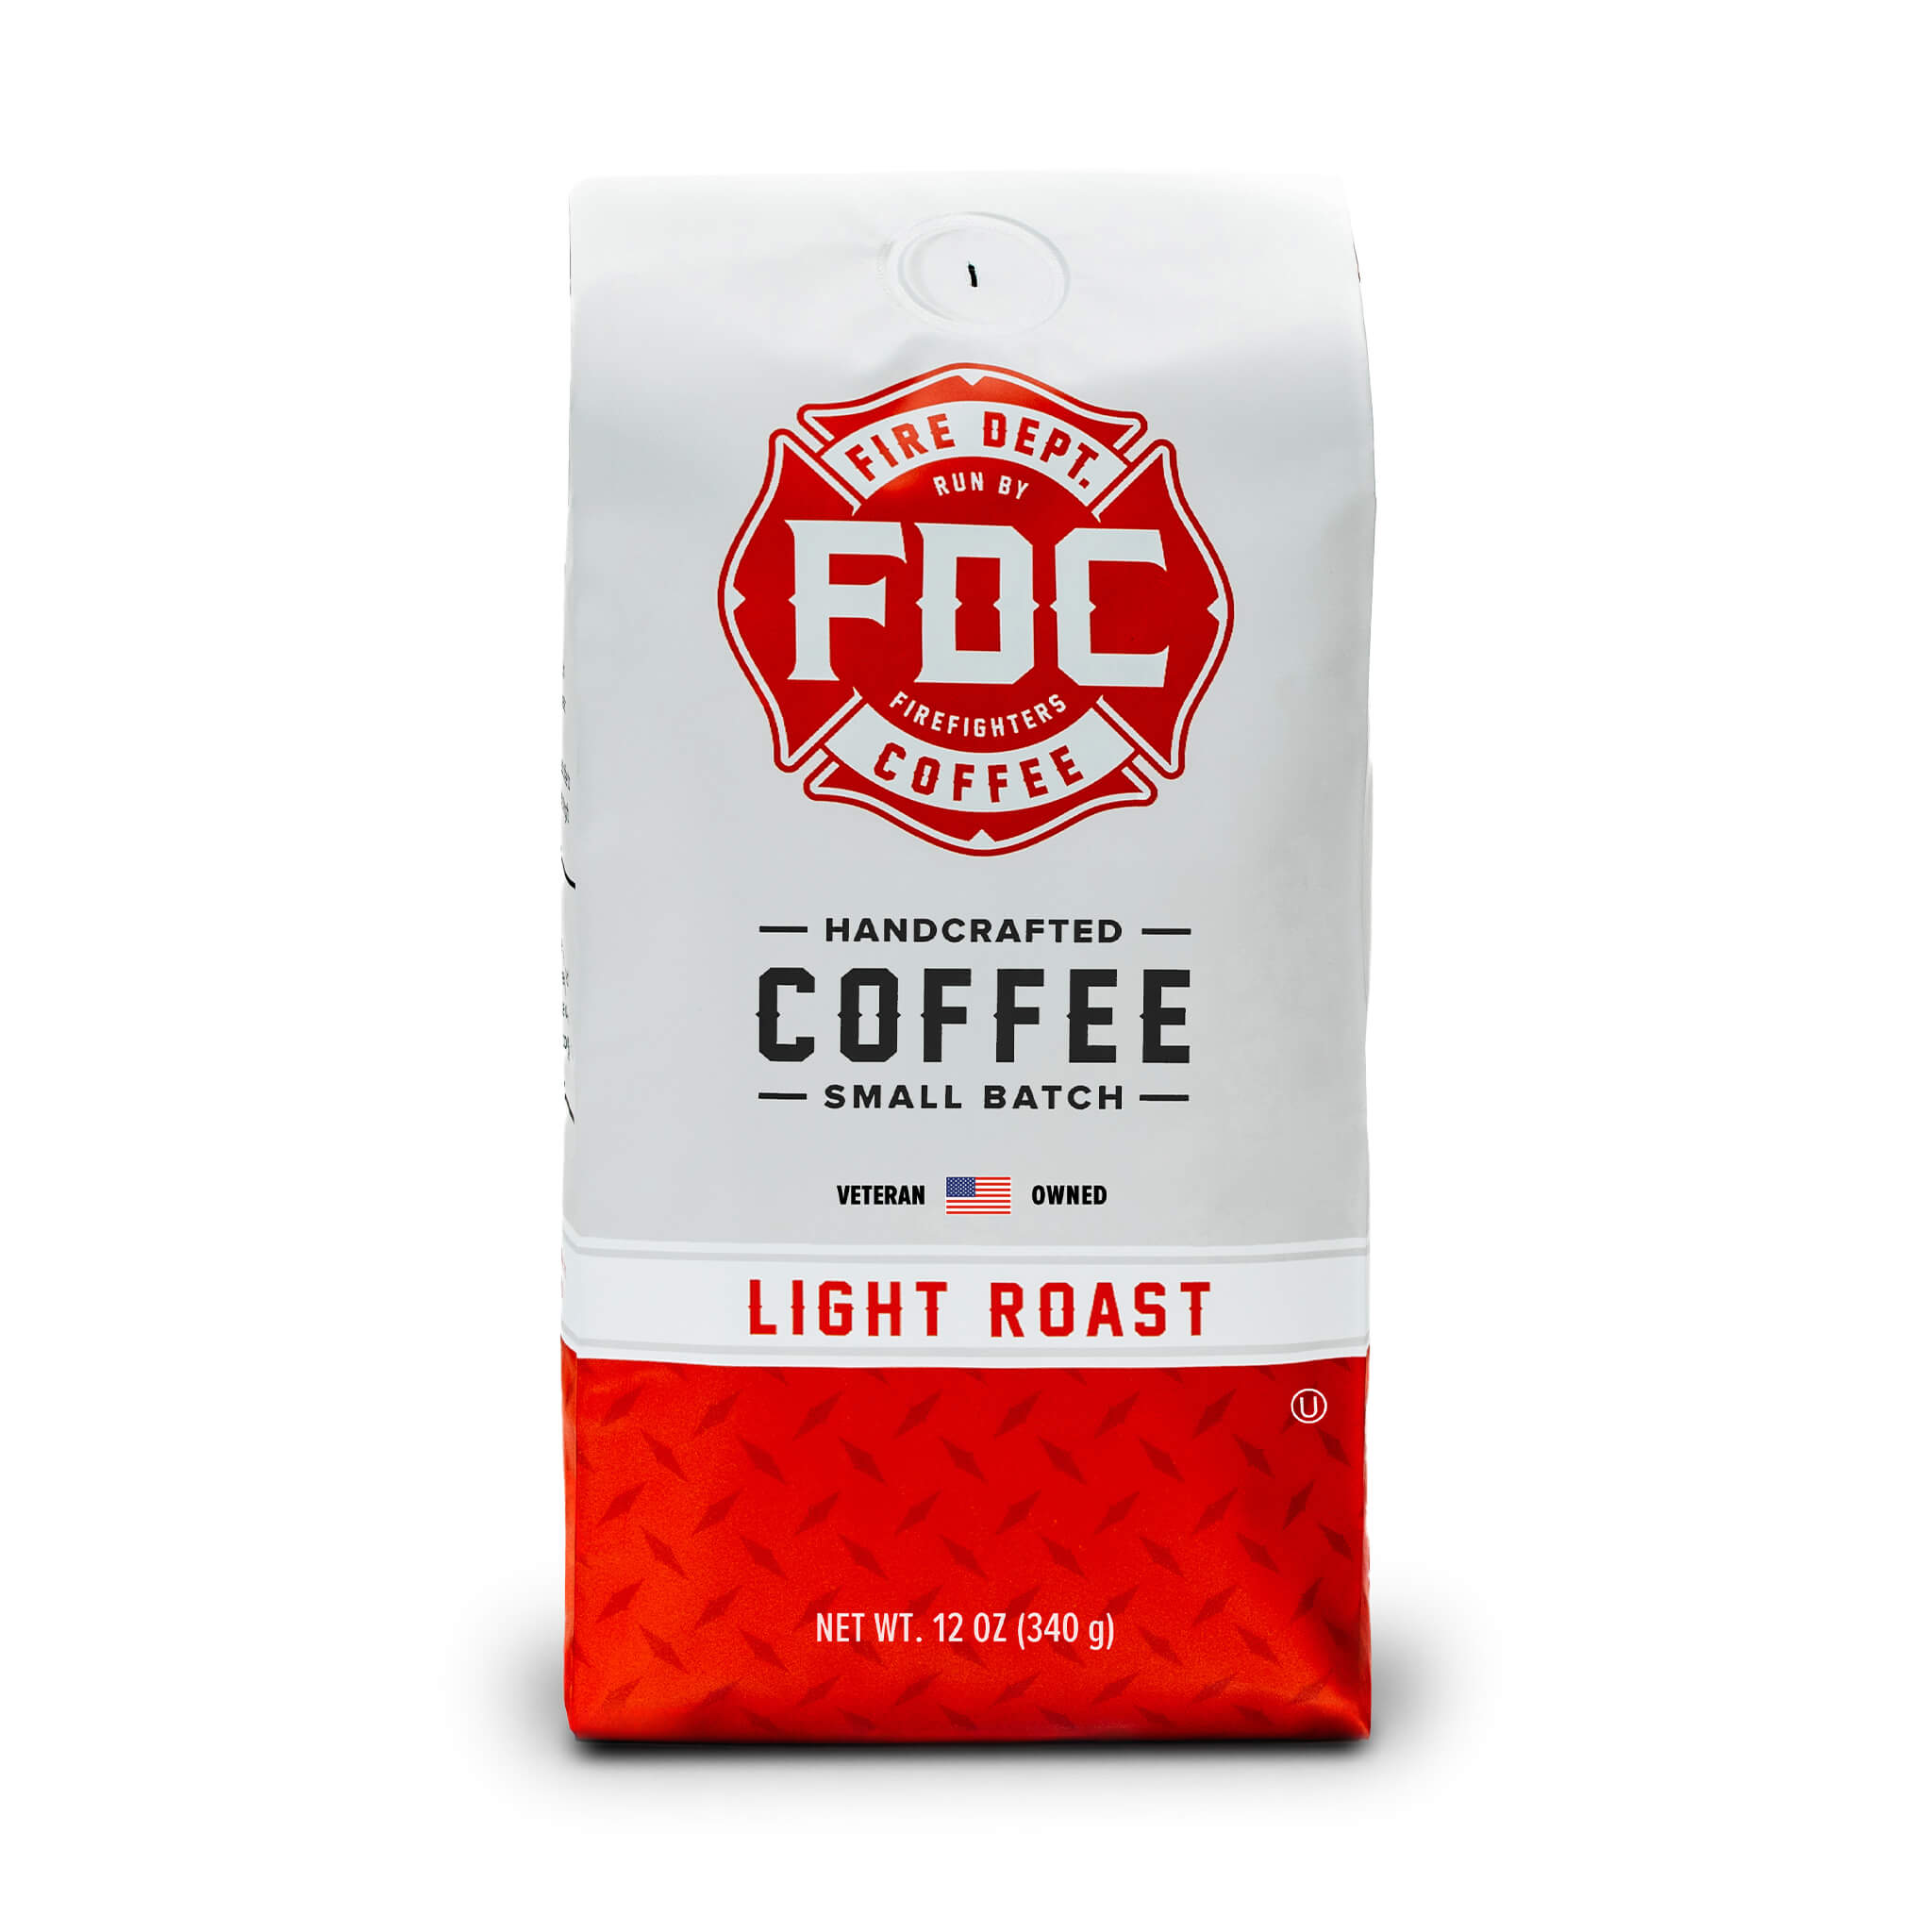 LIGHT ROAST COFFEE